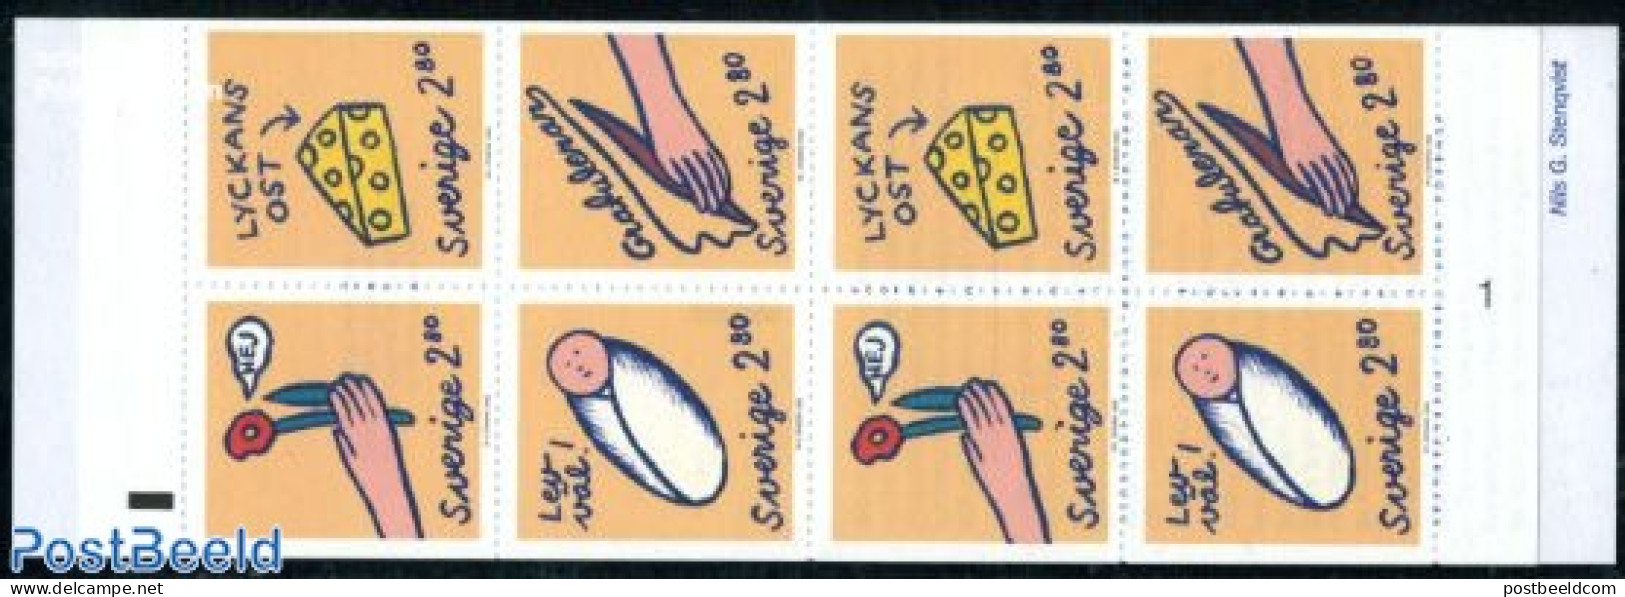 Sweden 1992 Greeting Stamps Booklet, Mint NH, Stamp Booklets - Unused Stamps